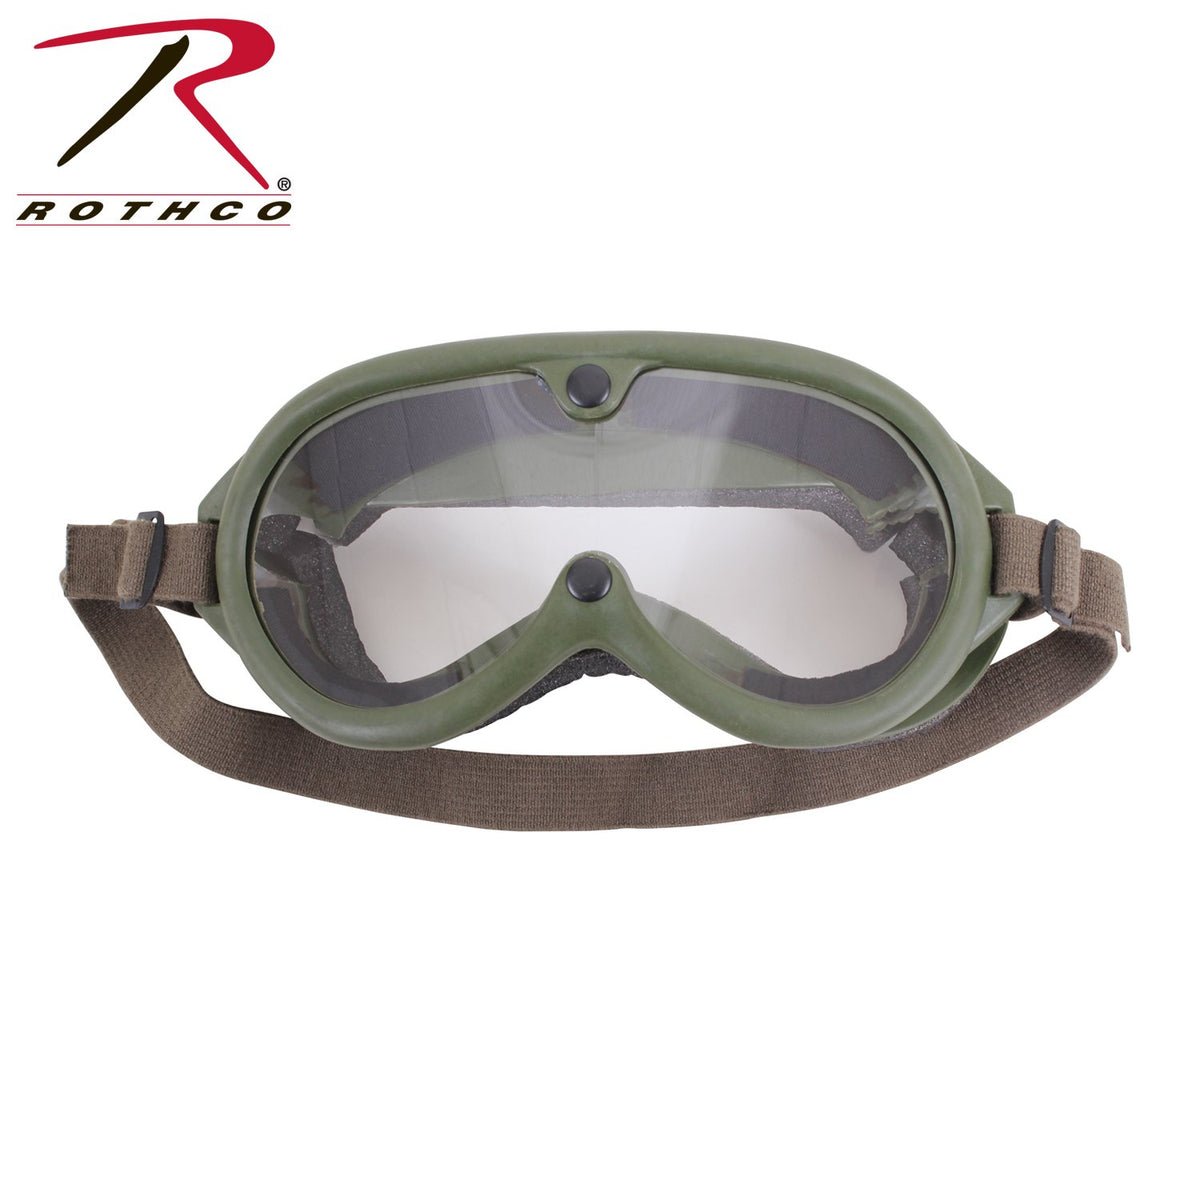 Rothco G.I. Type Sun, Wind & Dust Goggles – European Prepper